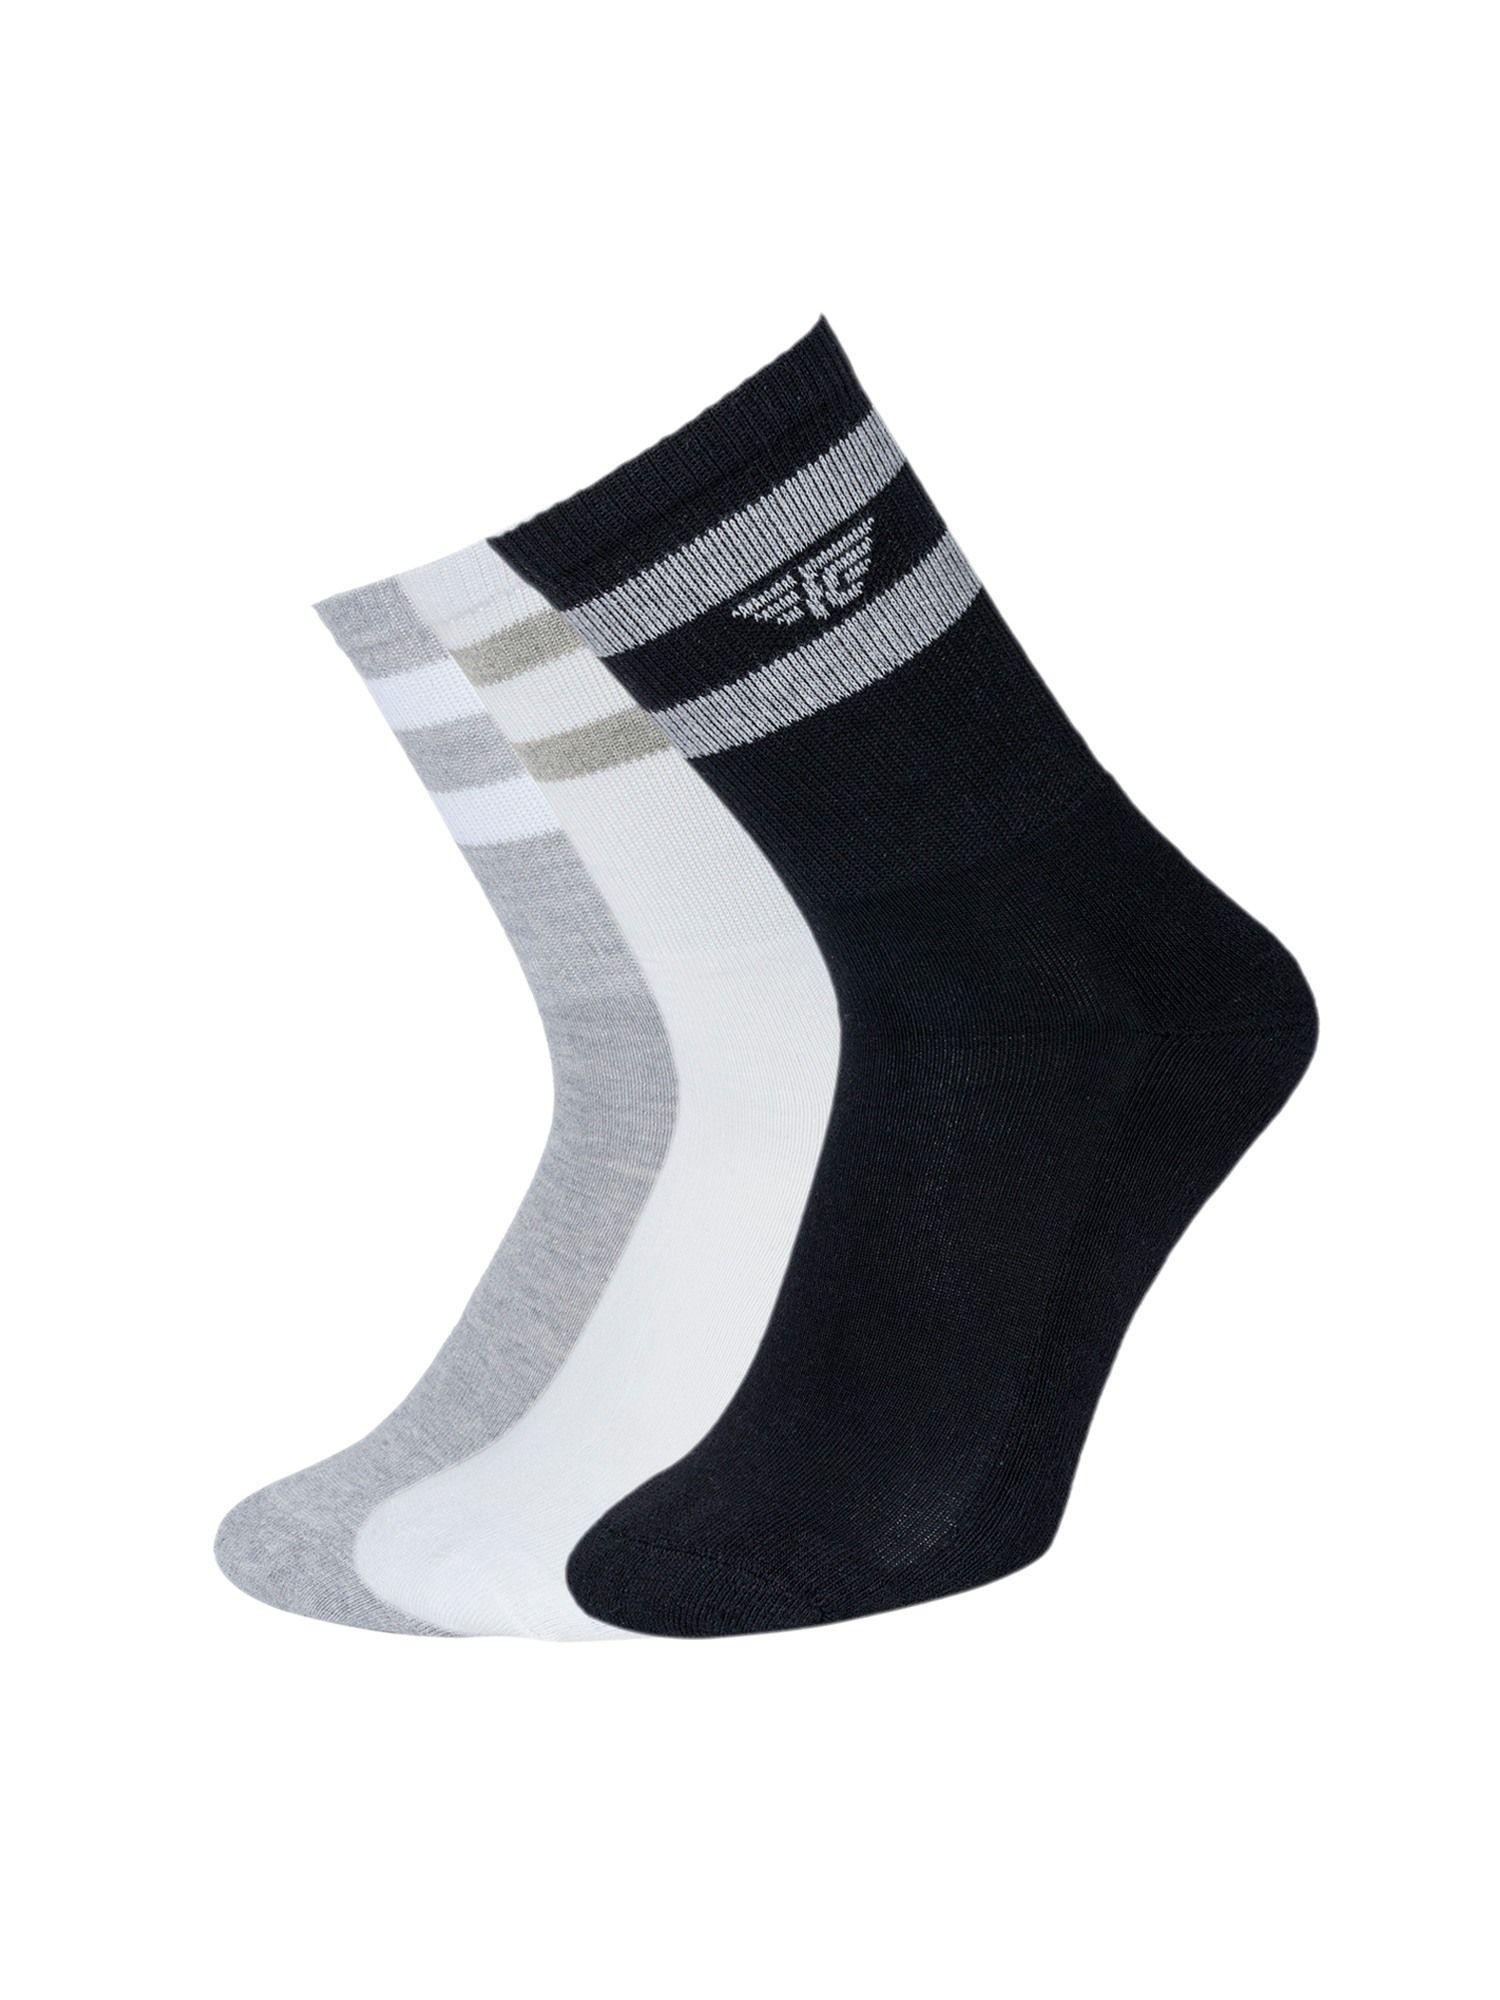 men multi-color stripe above ankle socks (pack of 3)